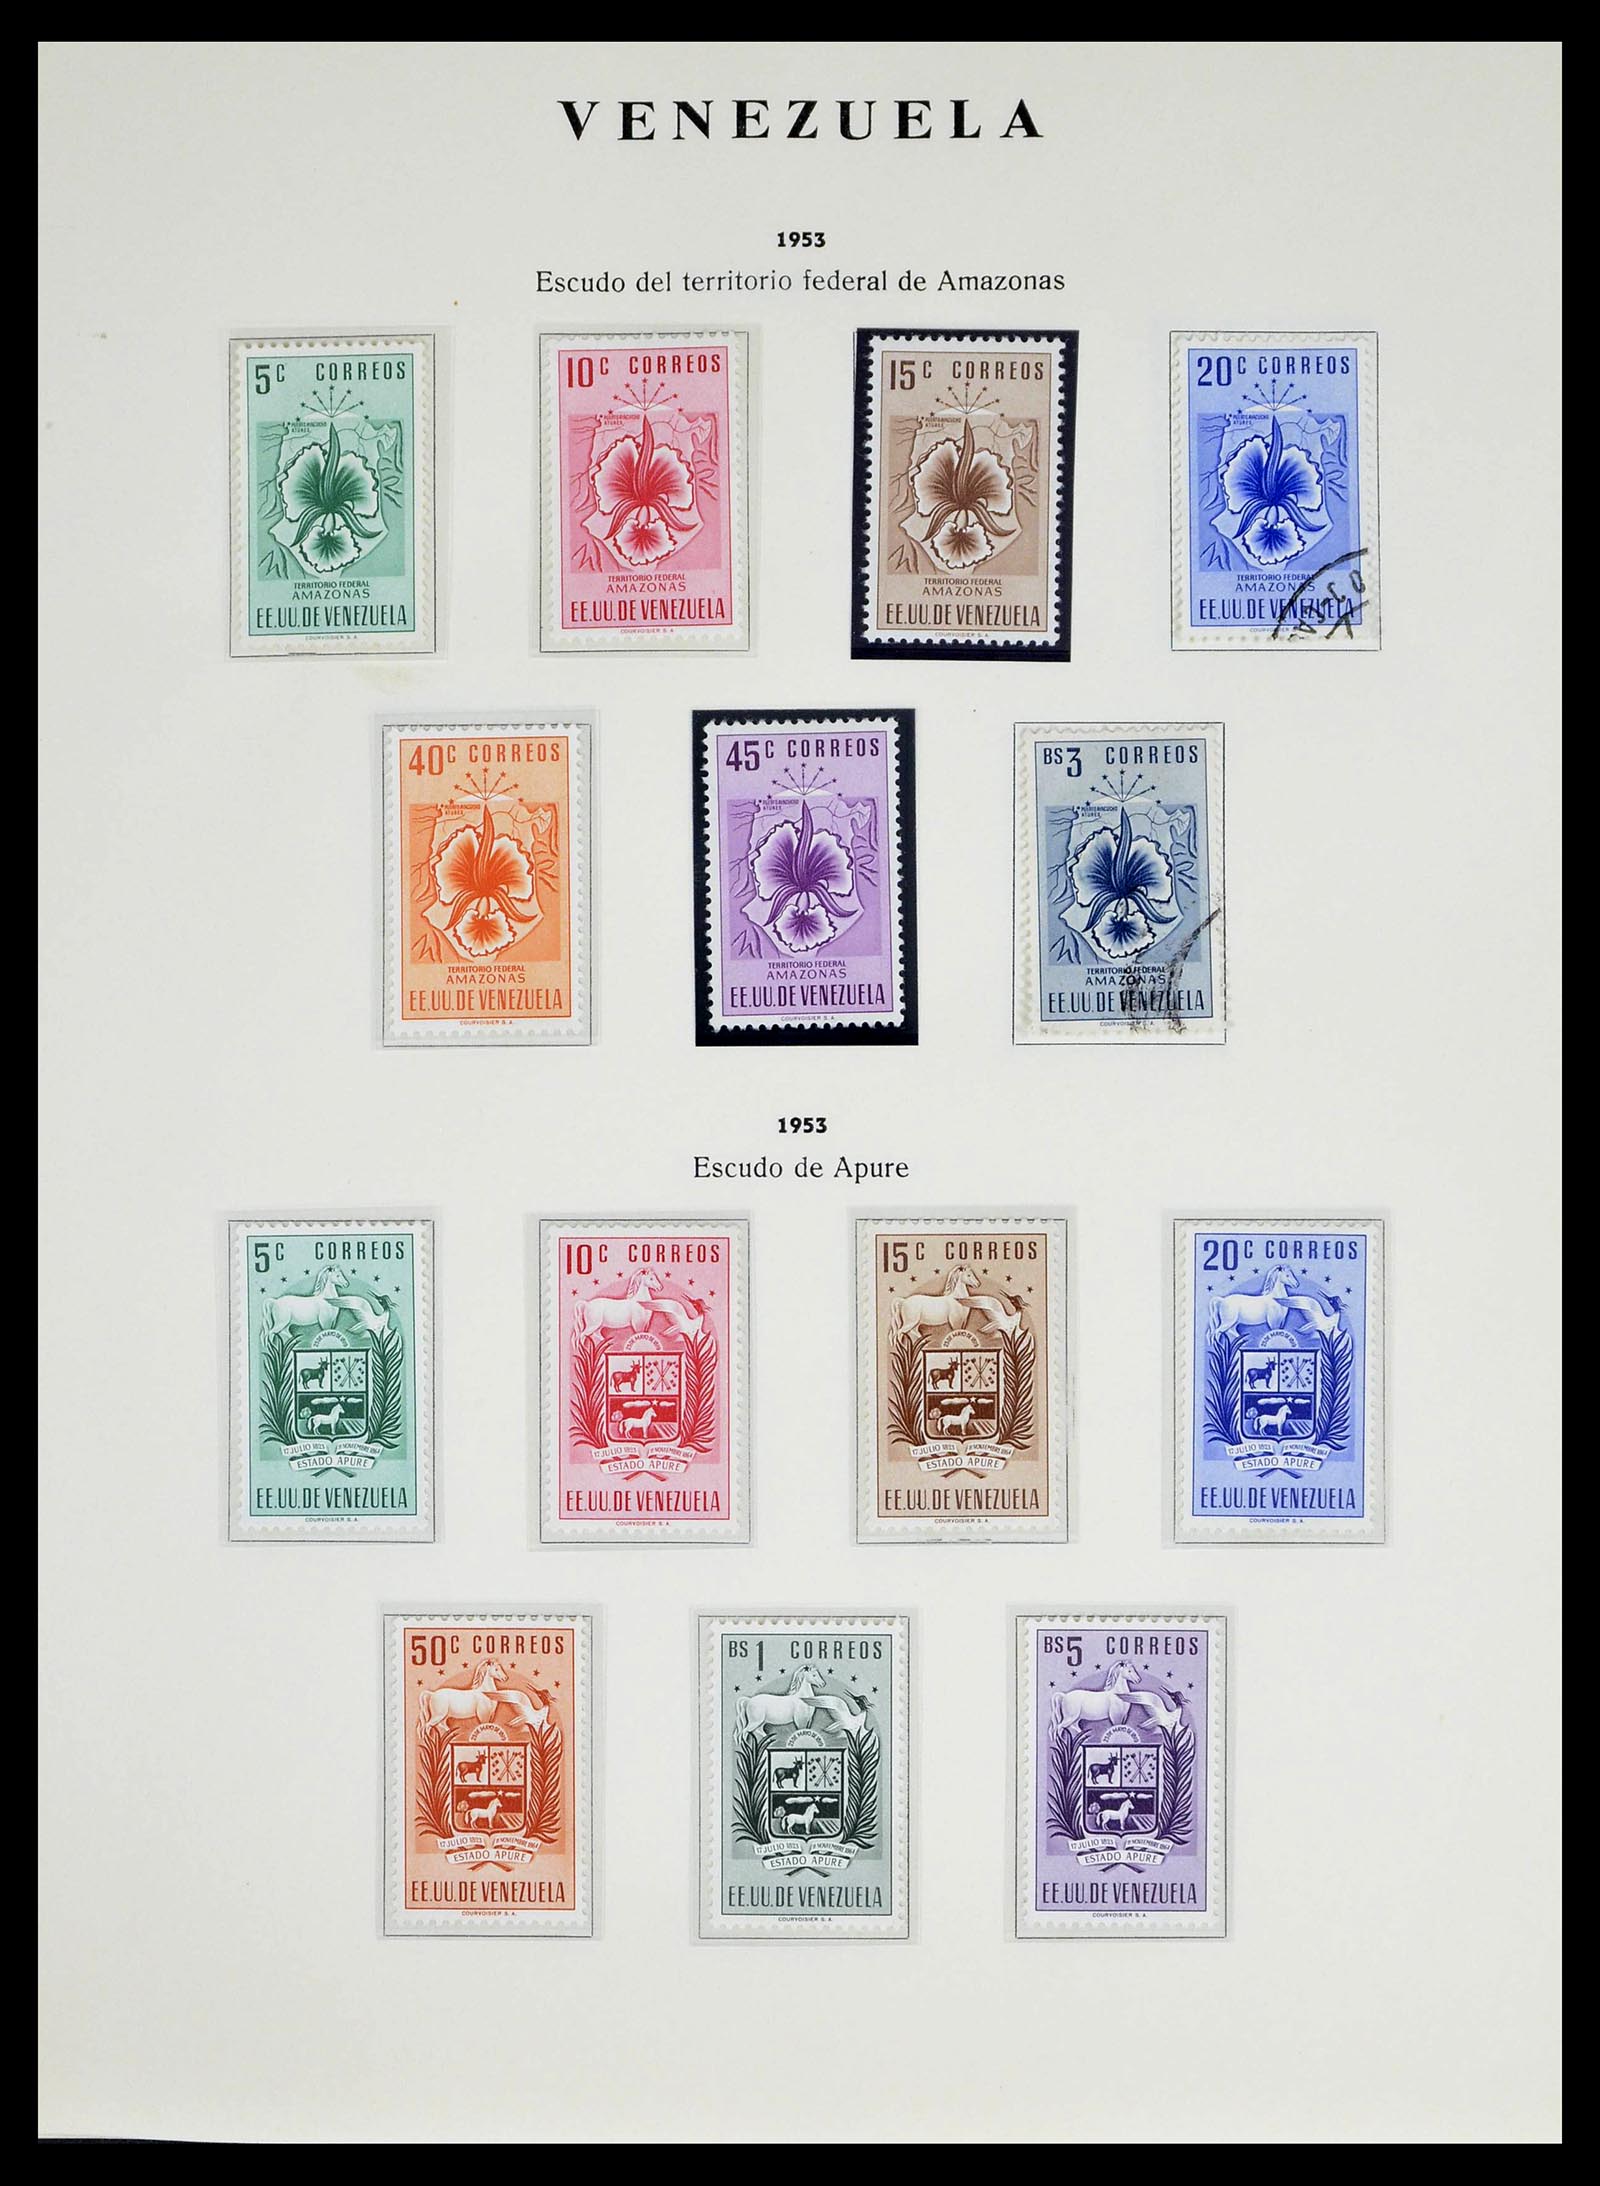 39223 0034 - Stamp collection 39223 Venezuela 1859-1984.